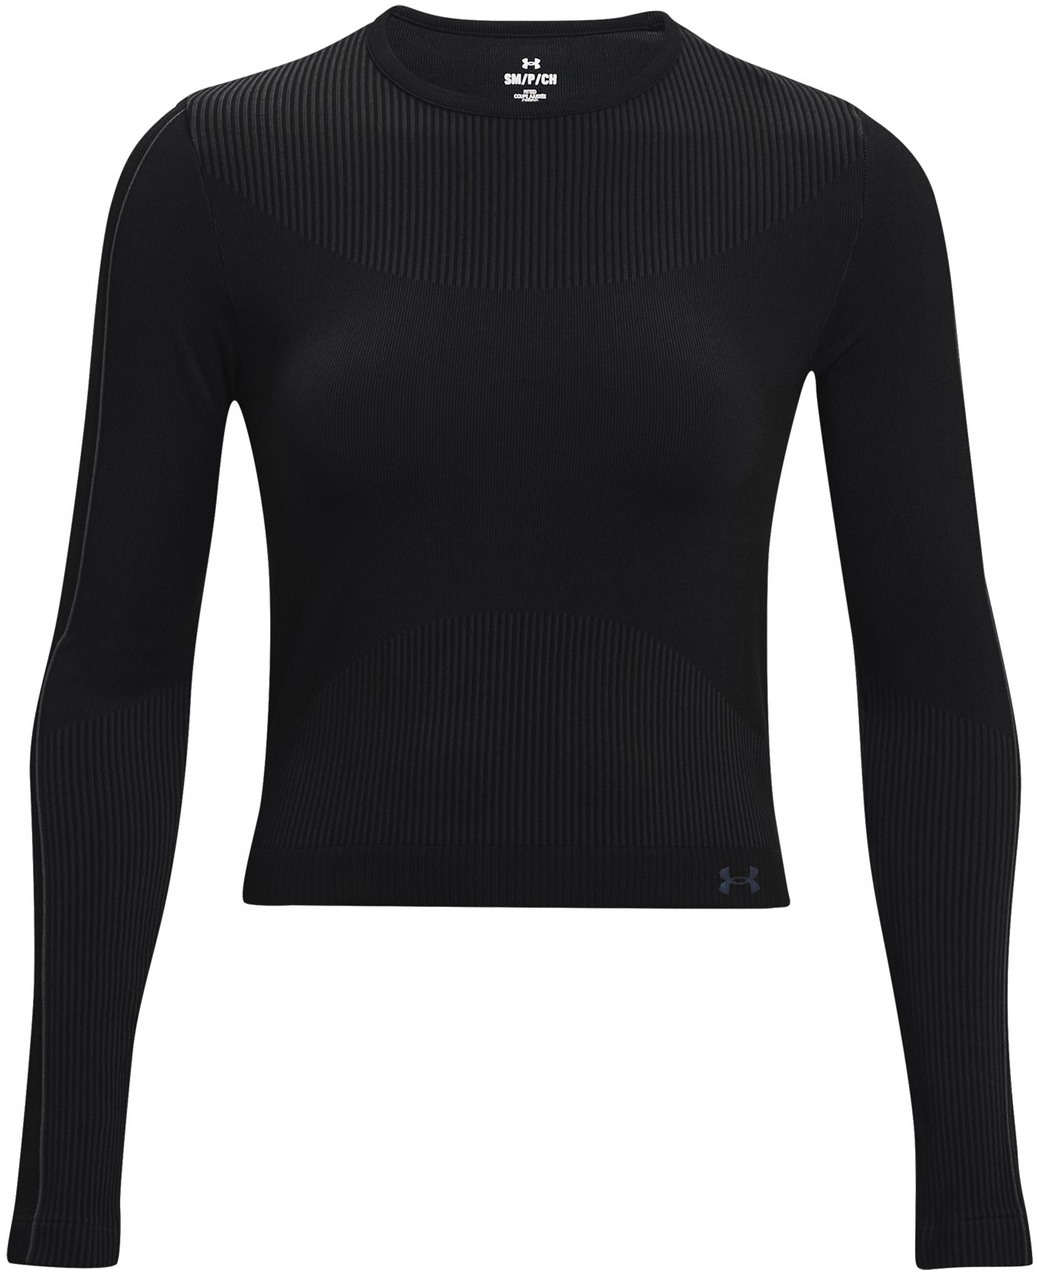 Womens functional long sleeve shirt Under Armour RUSH SEAMLESS LS W black